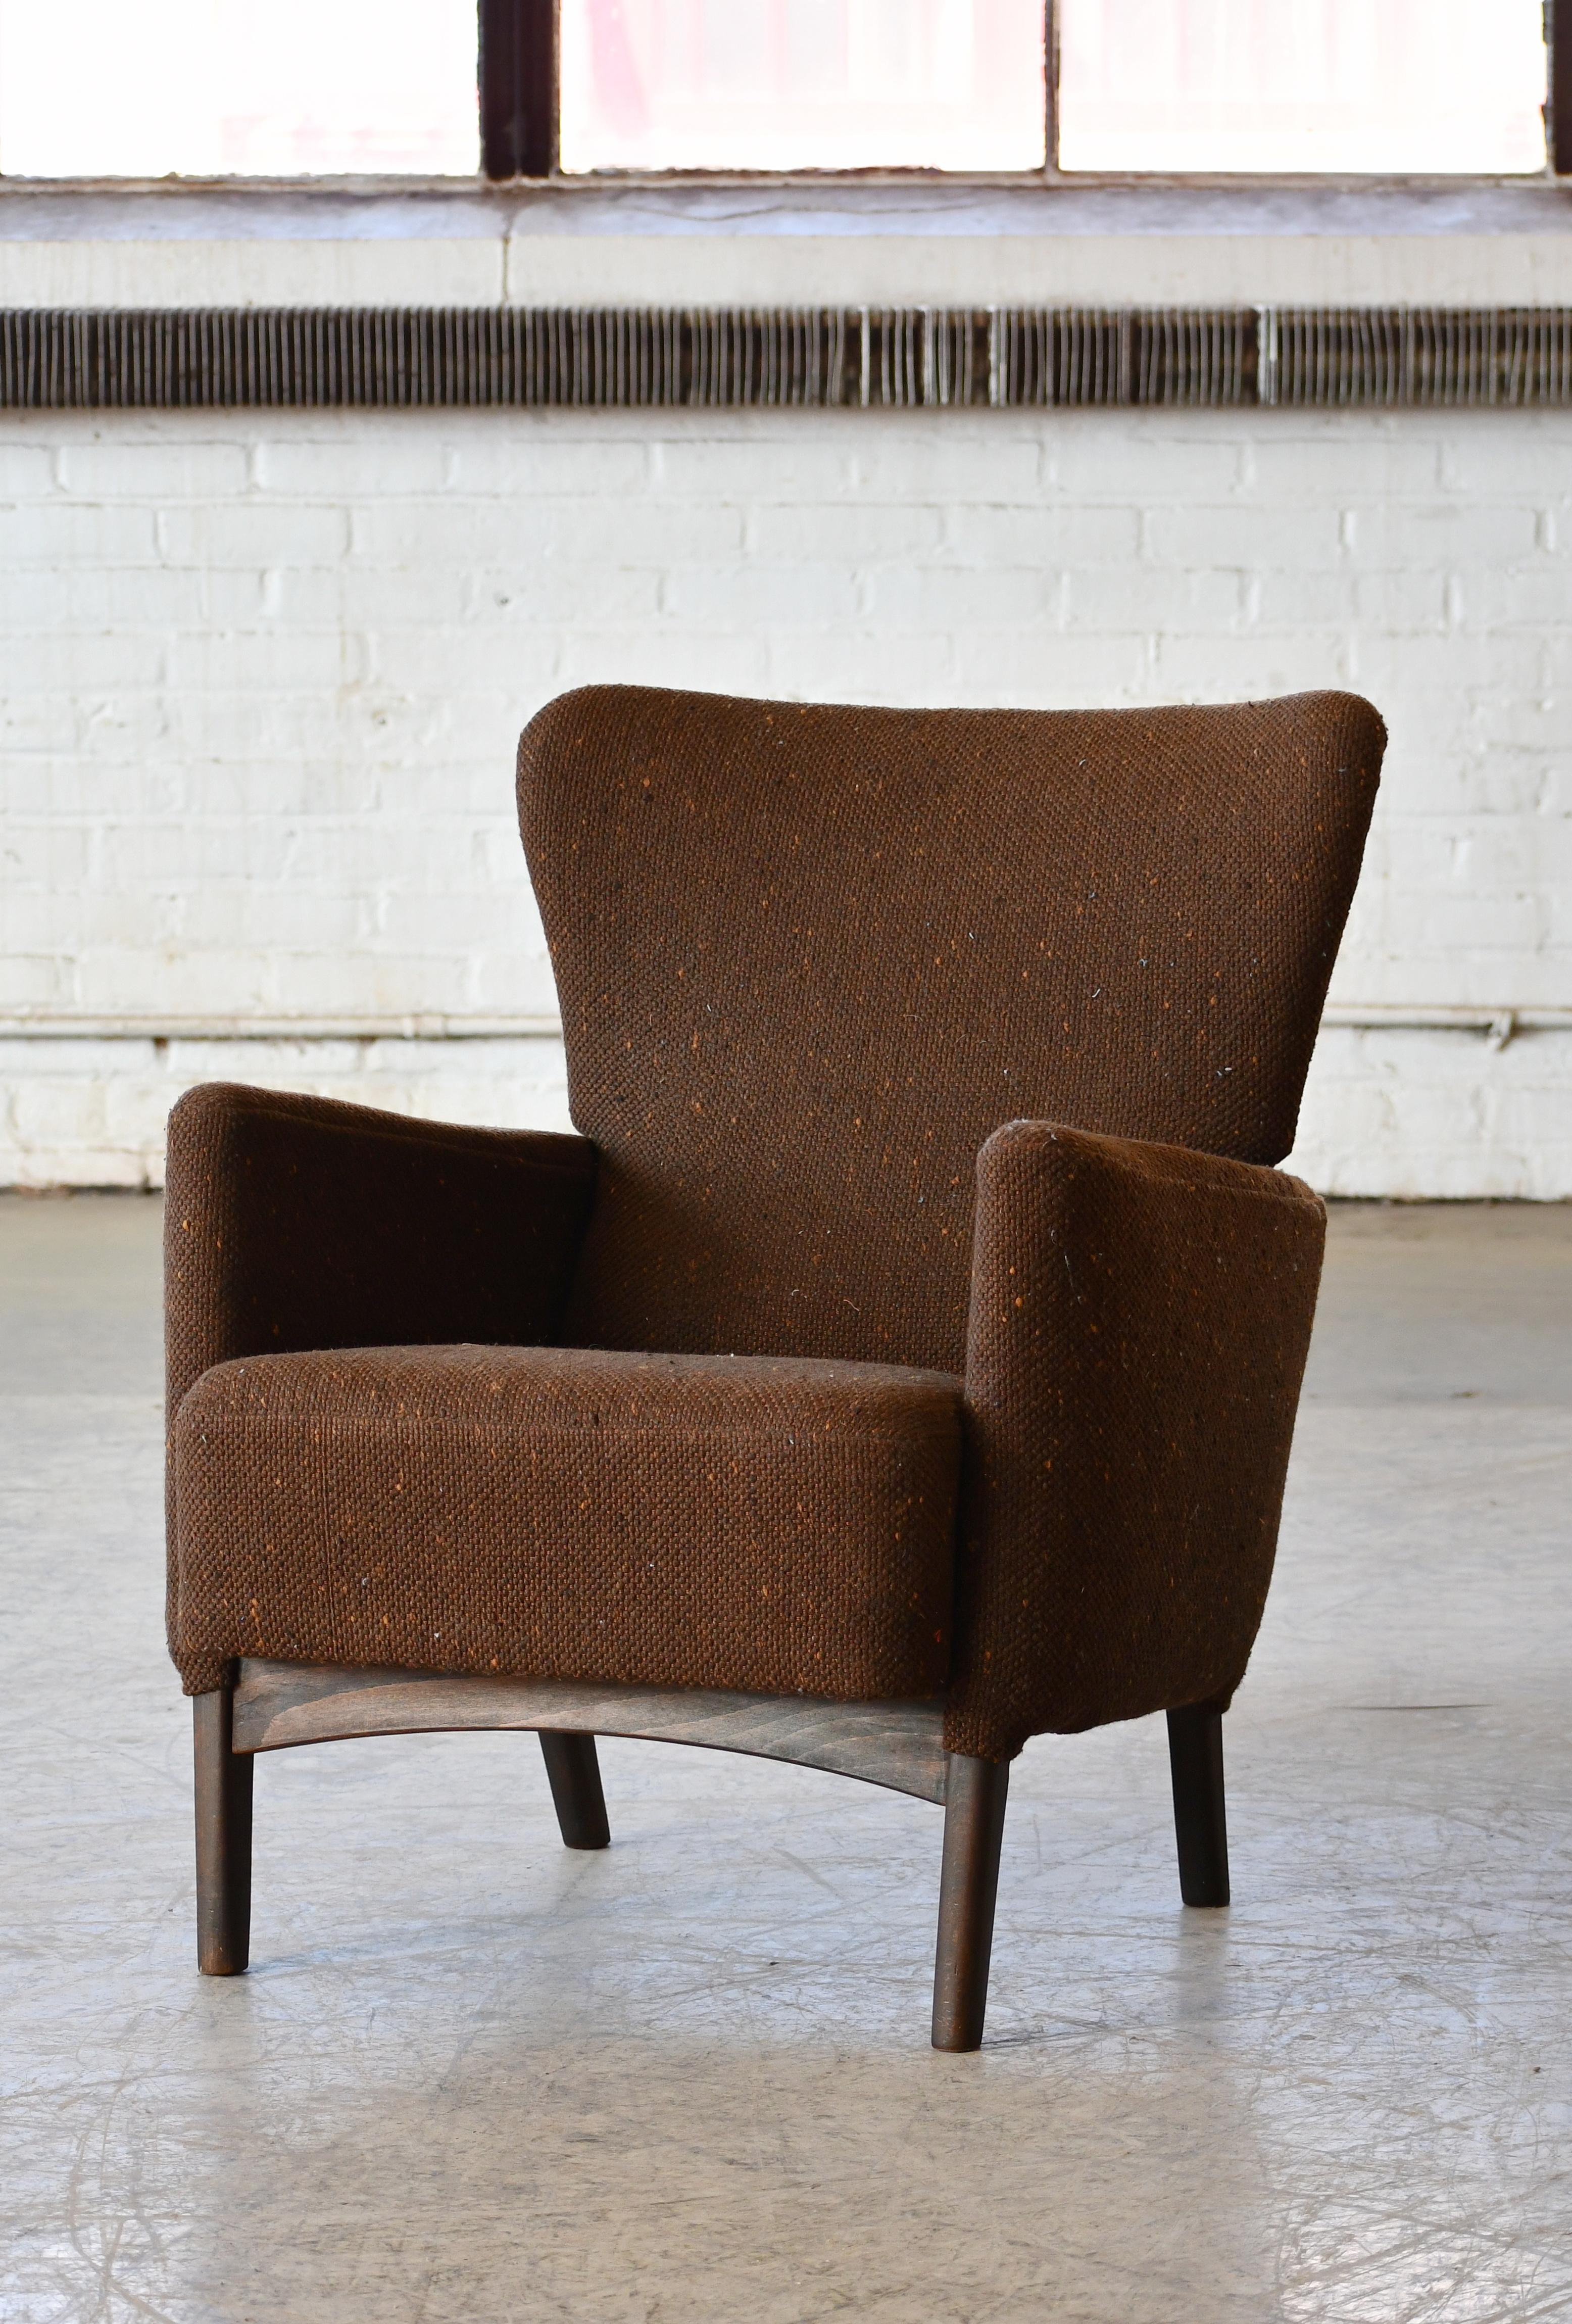 Scandinavian Modern Low Back Lounge Chair by Fritz Hansen, Denmark 1950's For Sale